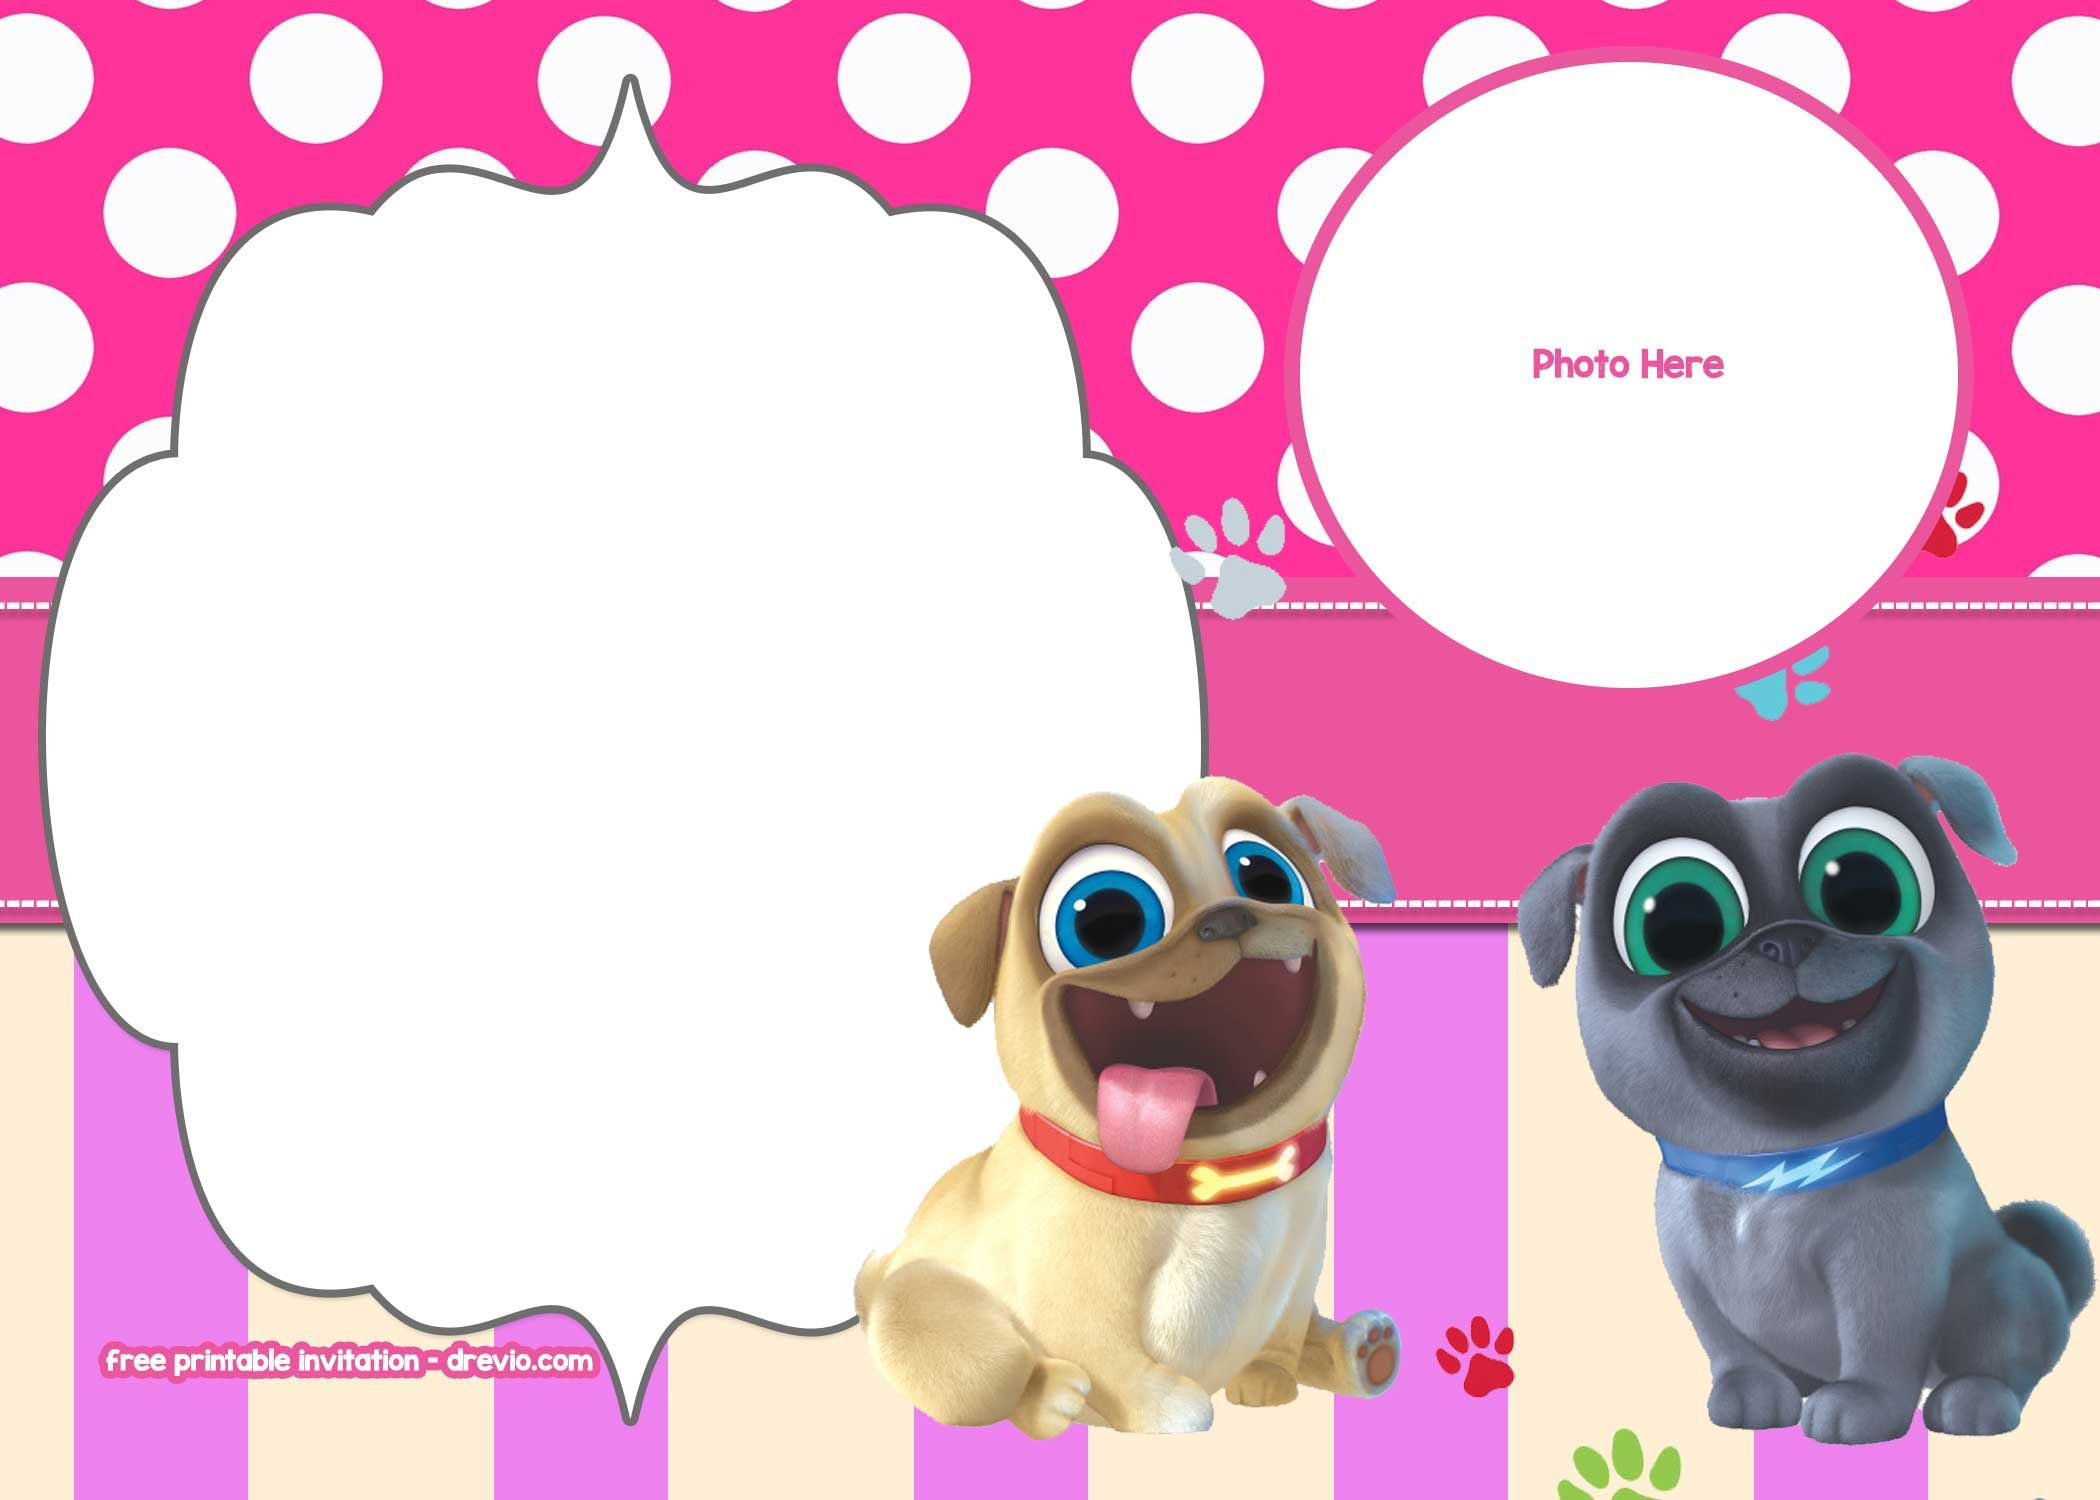 Free Disney Puppy Dog Pals Invitation Free Printable Birthday with regard to dimensions 2100 X 1500